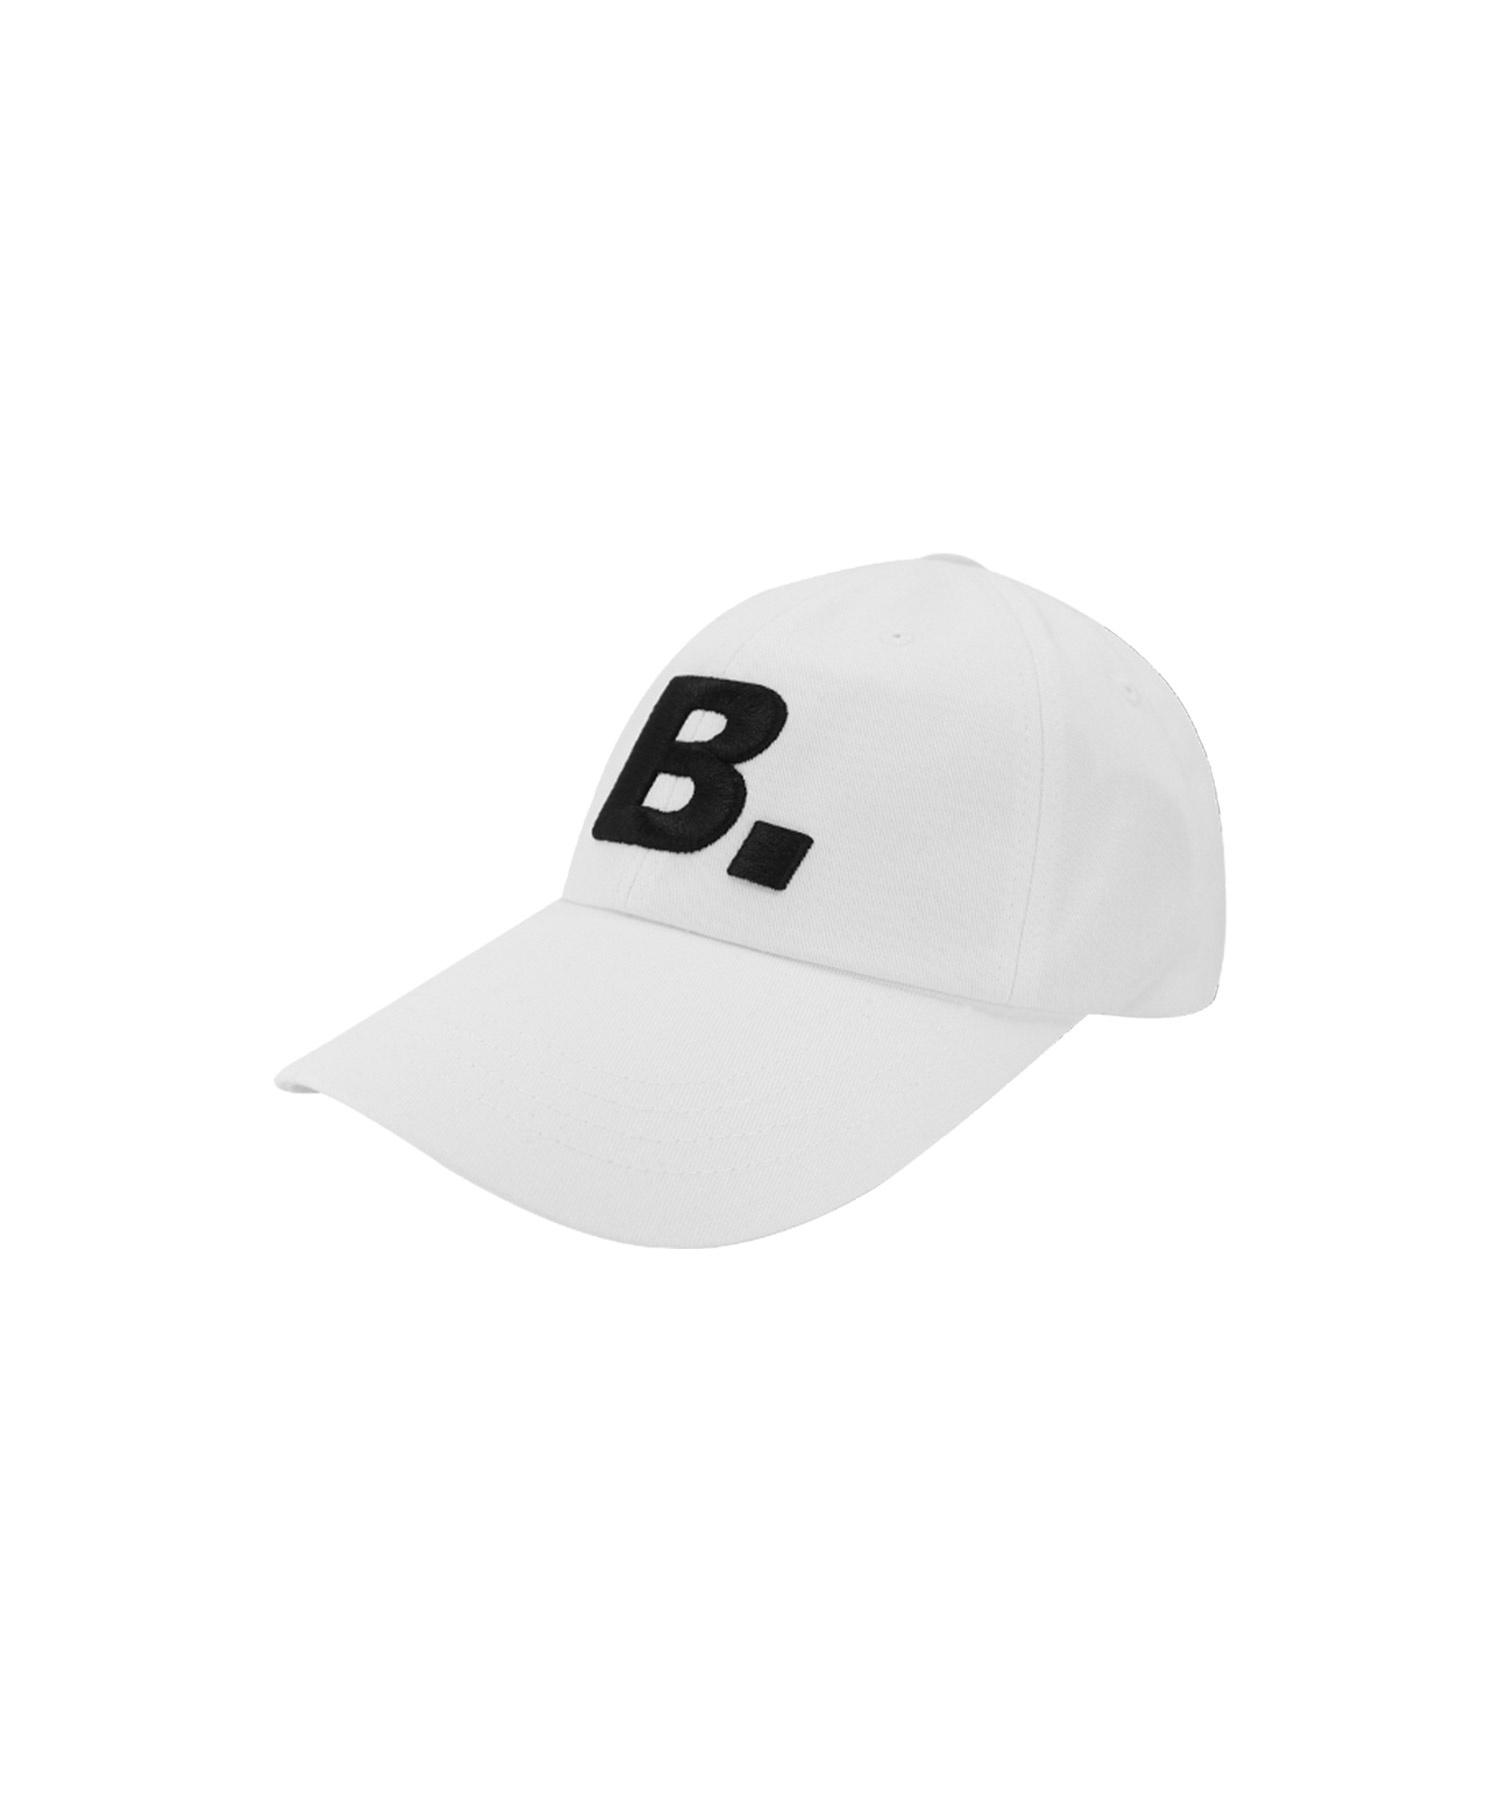 B. CAP [WHITE]